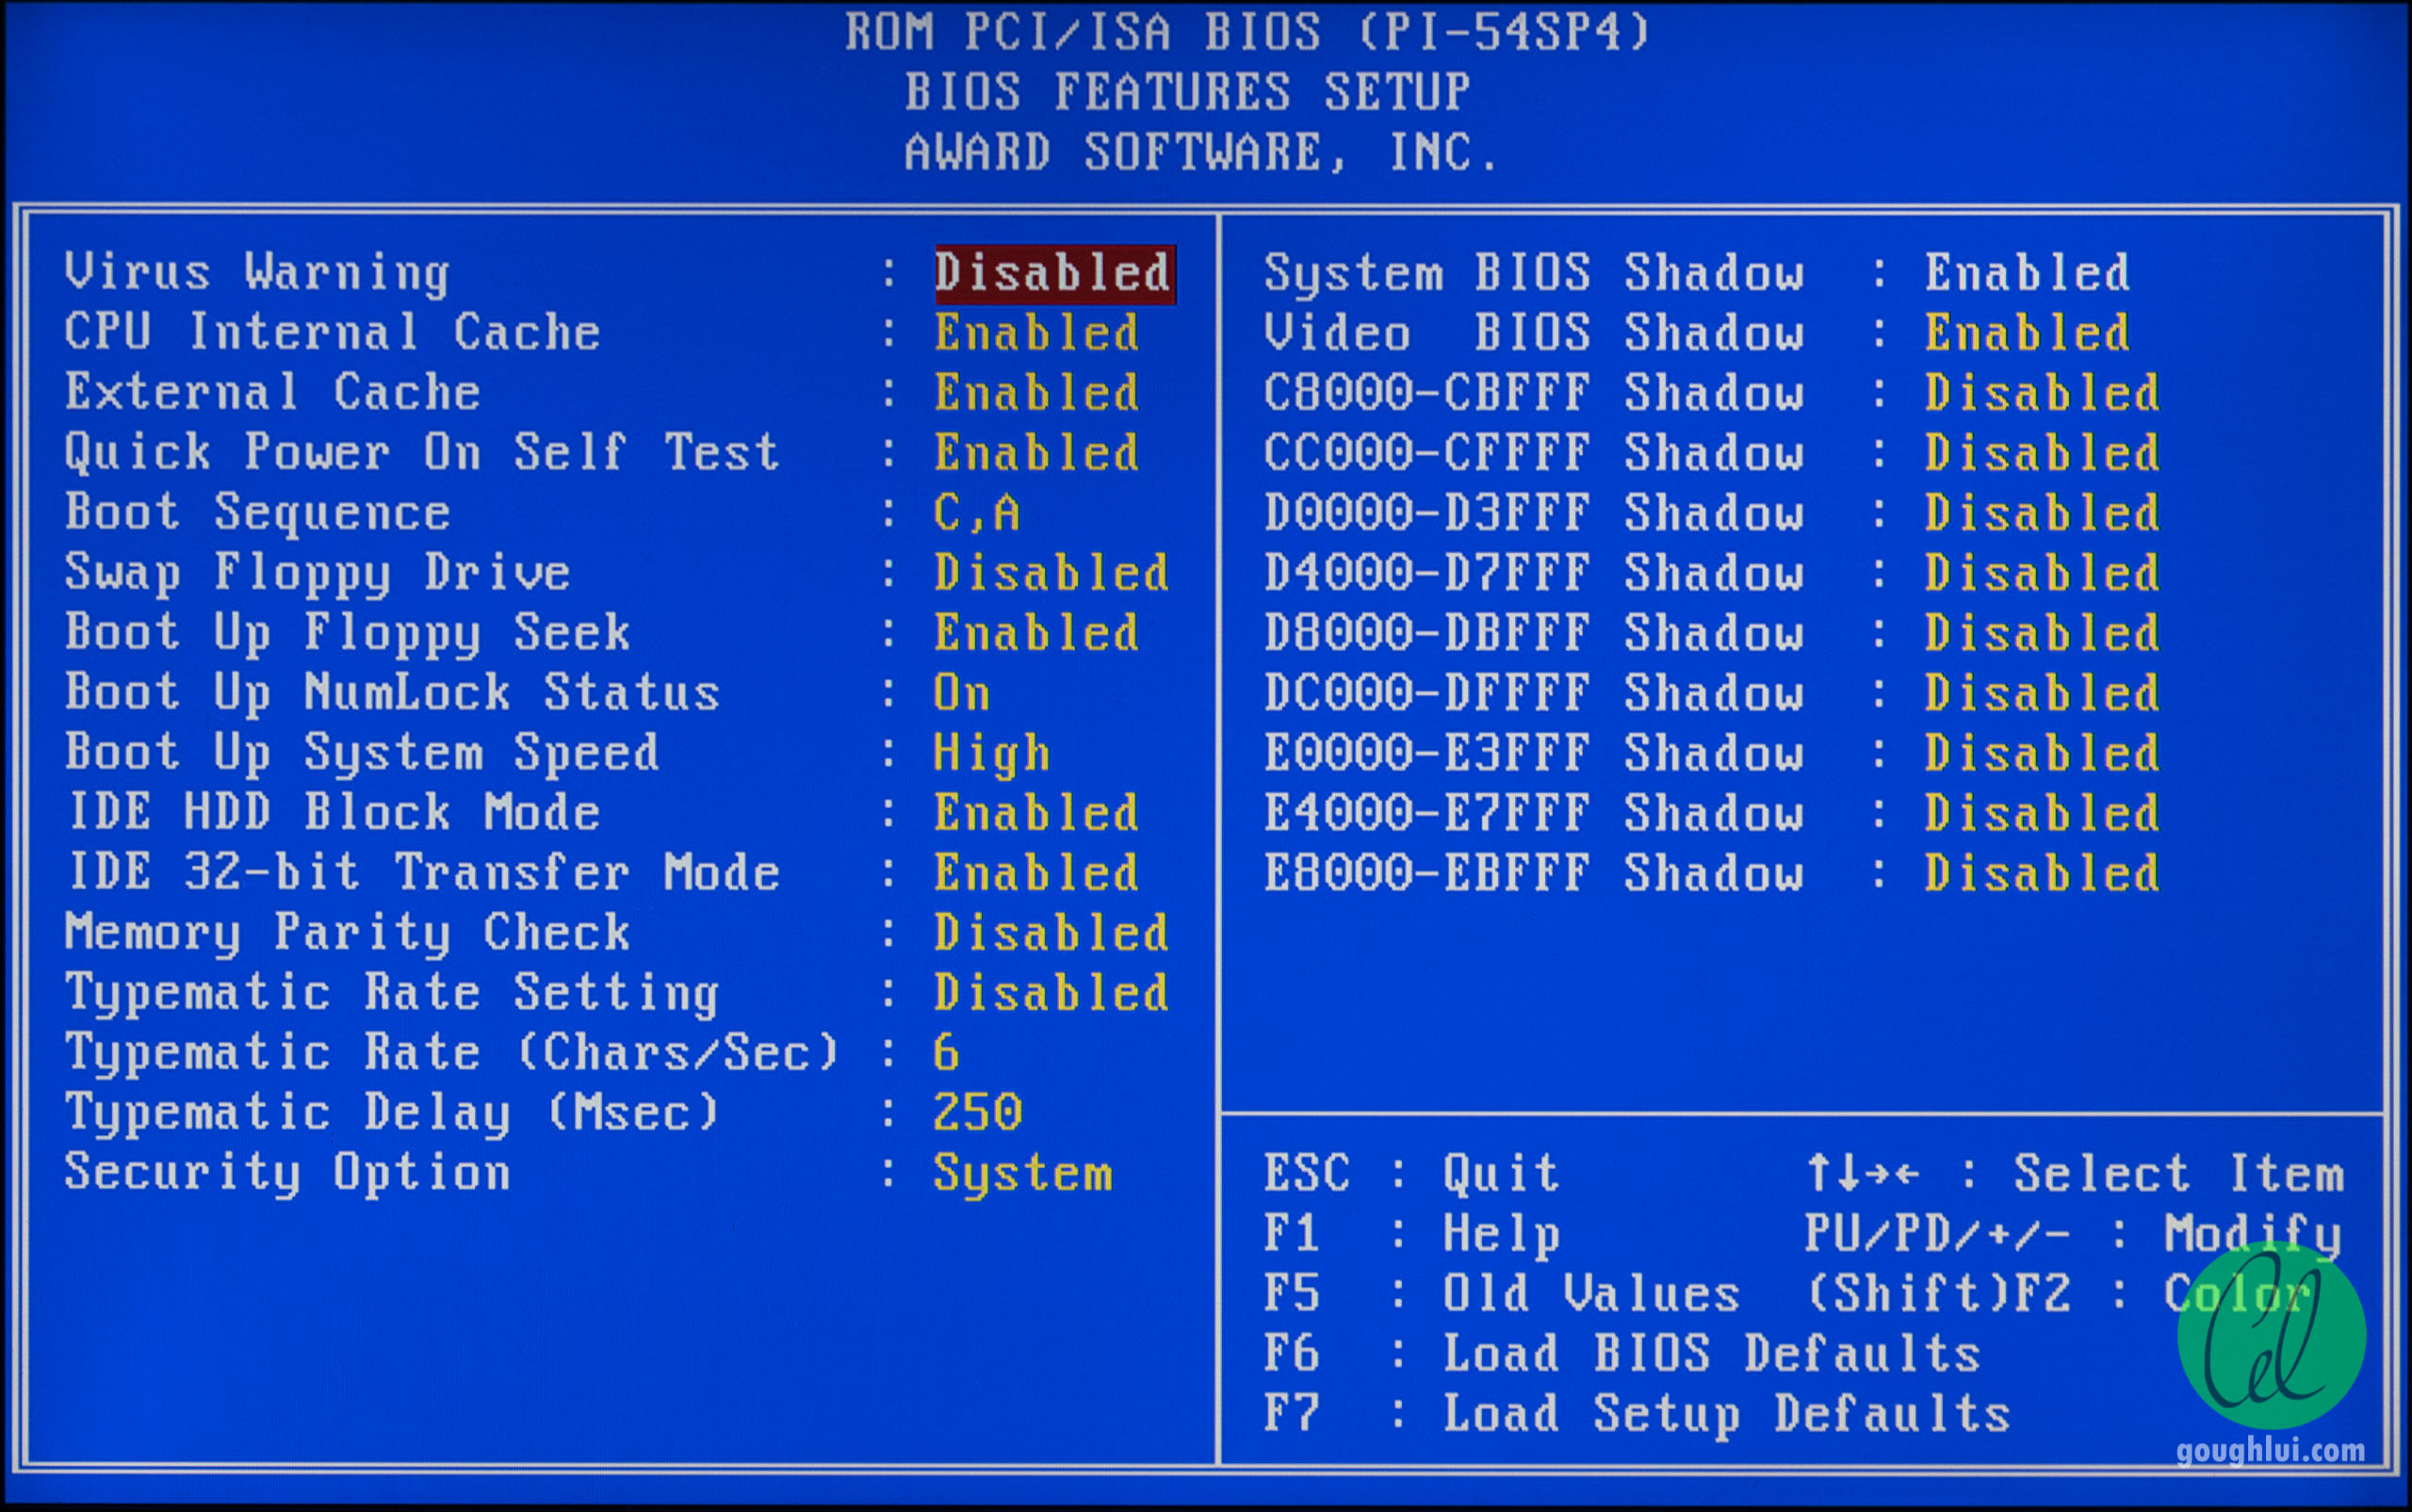 Update system bios. Floppy дисковод биос. Что такое floppy в биосе. Floppy Drive в BIOS. Система биос.